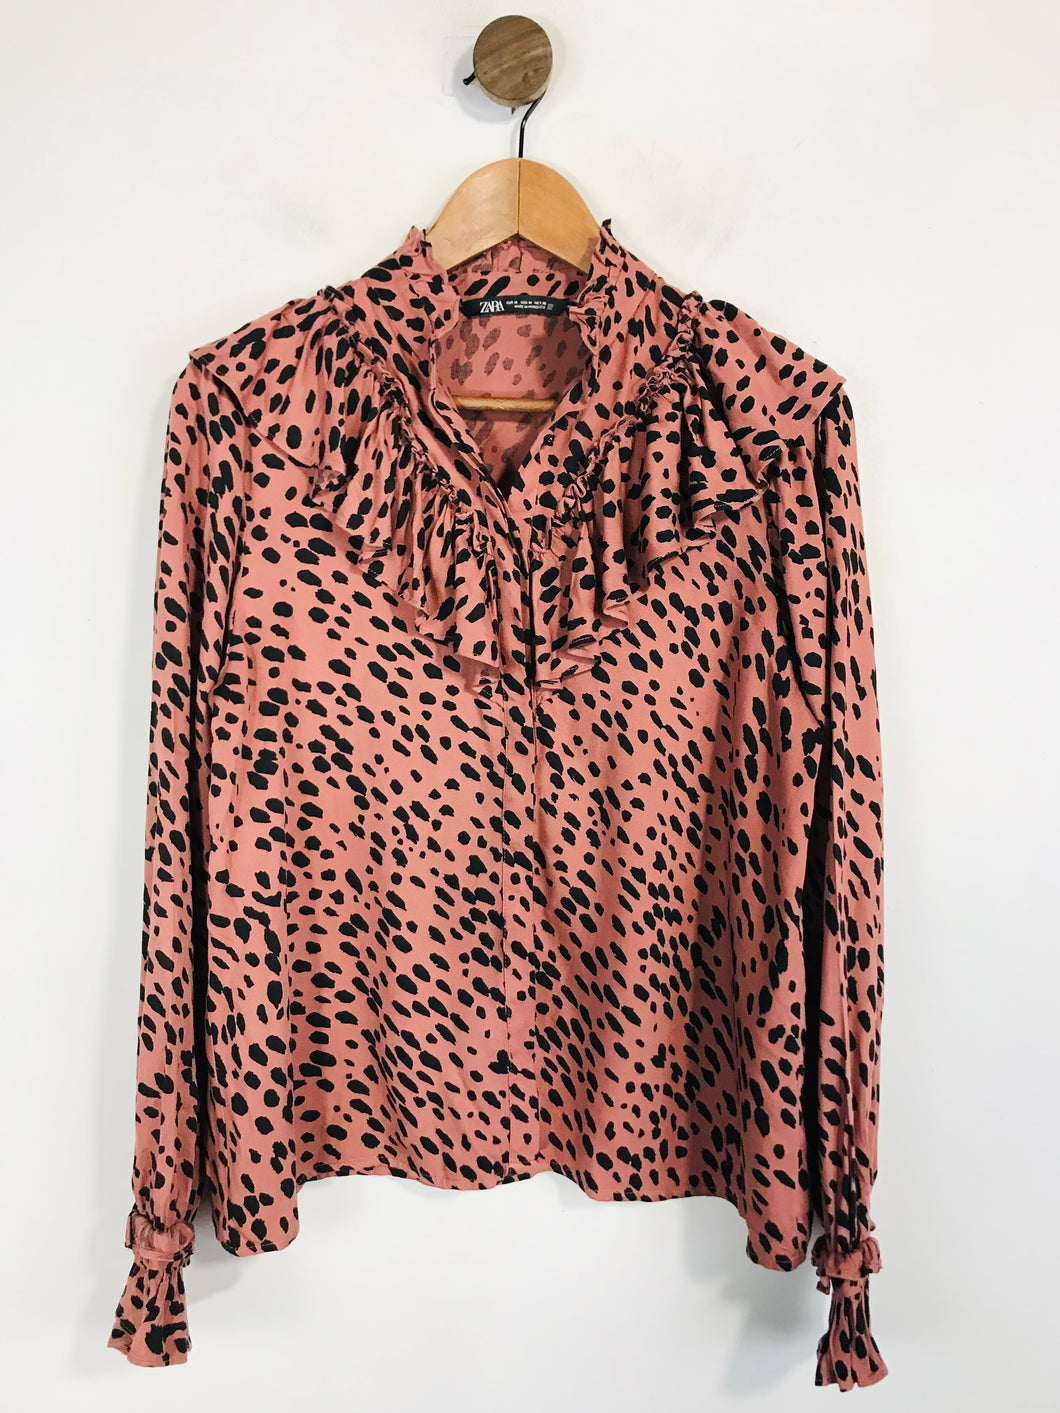 Zara Women's Polka Dot Ruffle Blouse | M UK10-12 | Pink